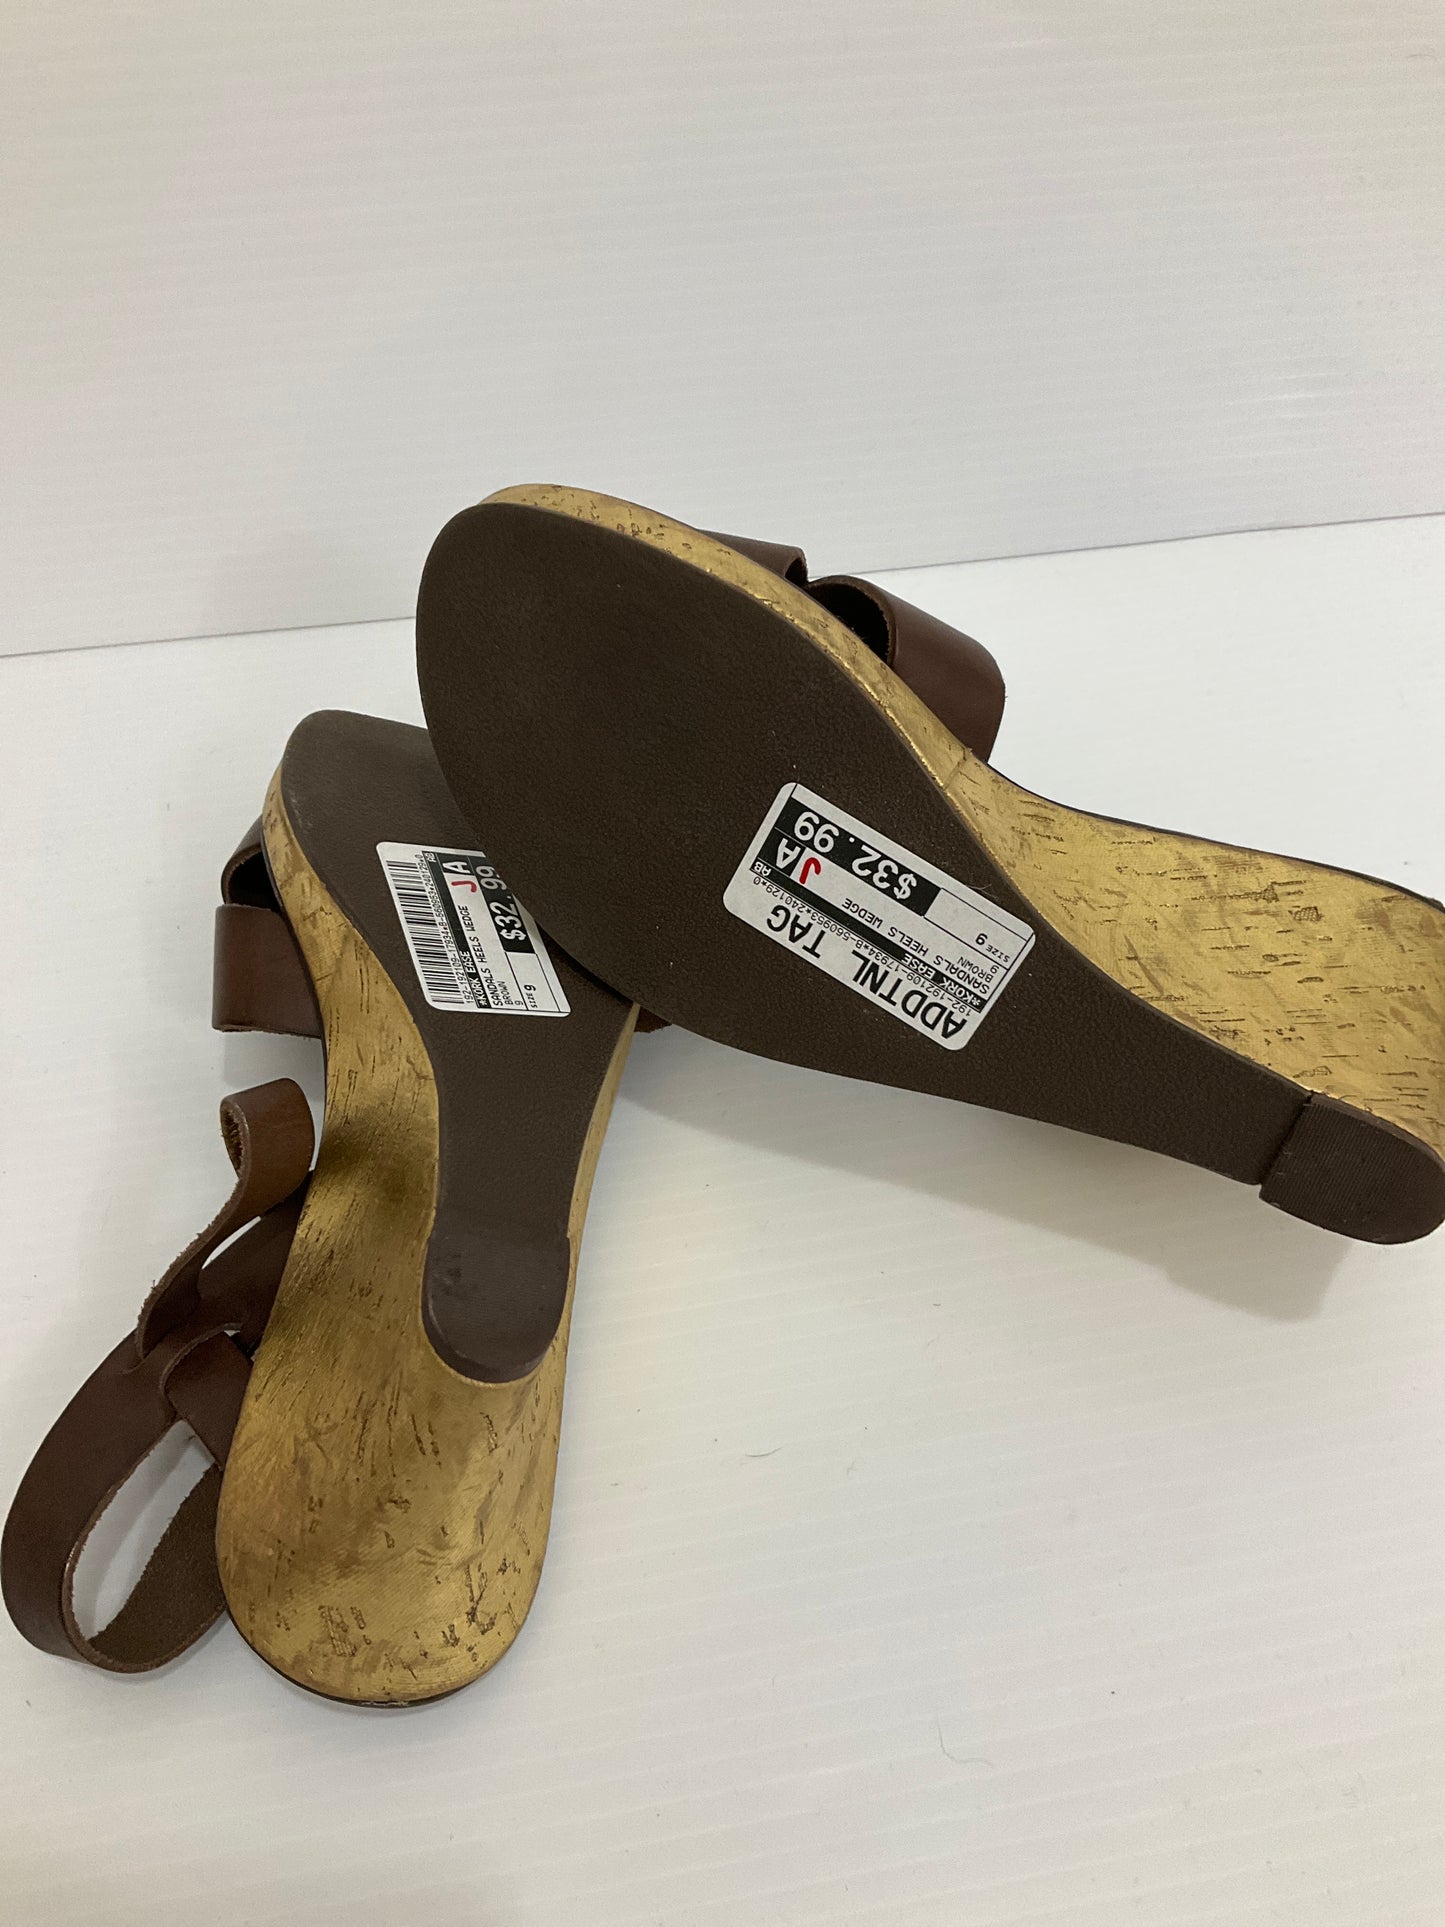 Sandals Heels Wedge By Kork Ease  Size: 9